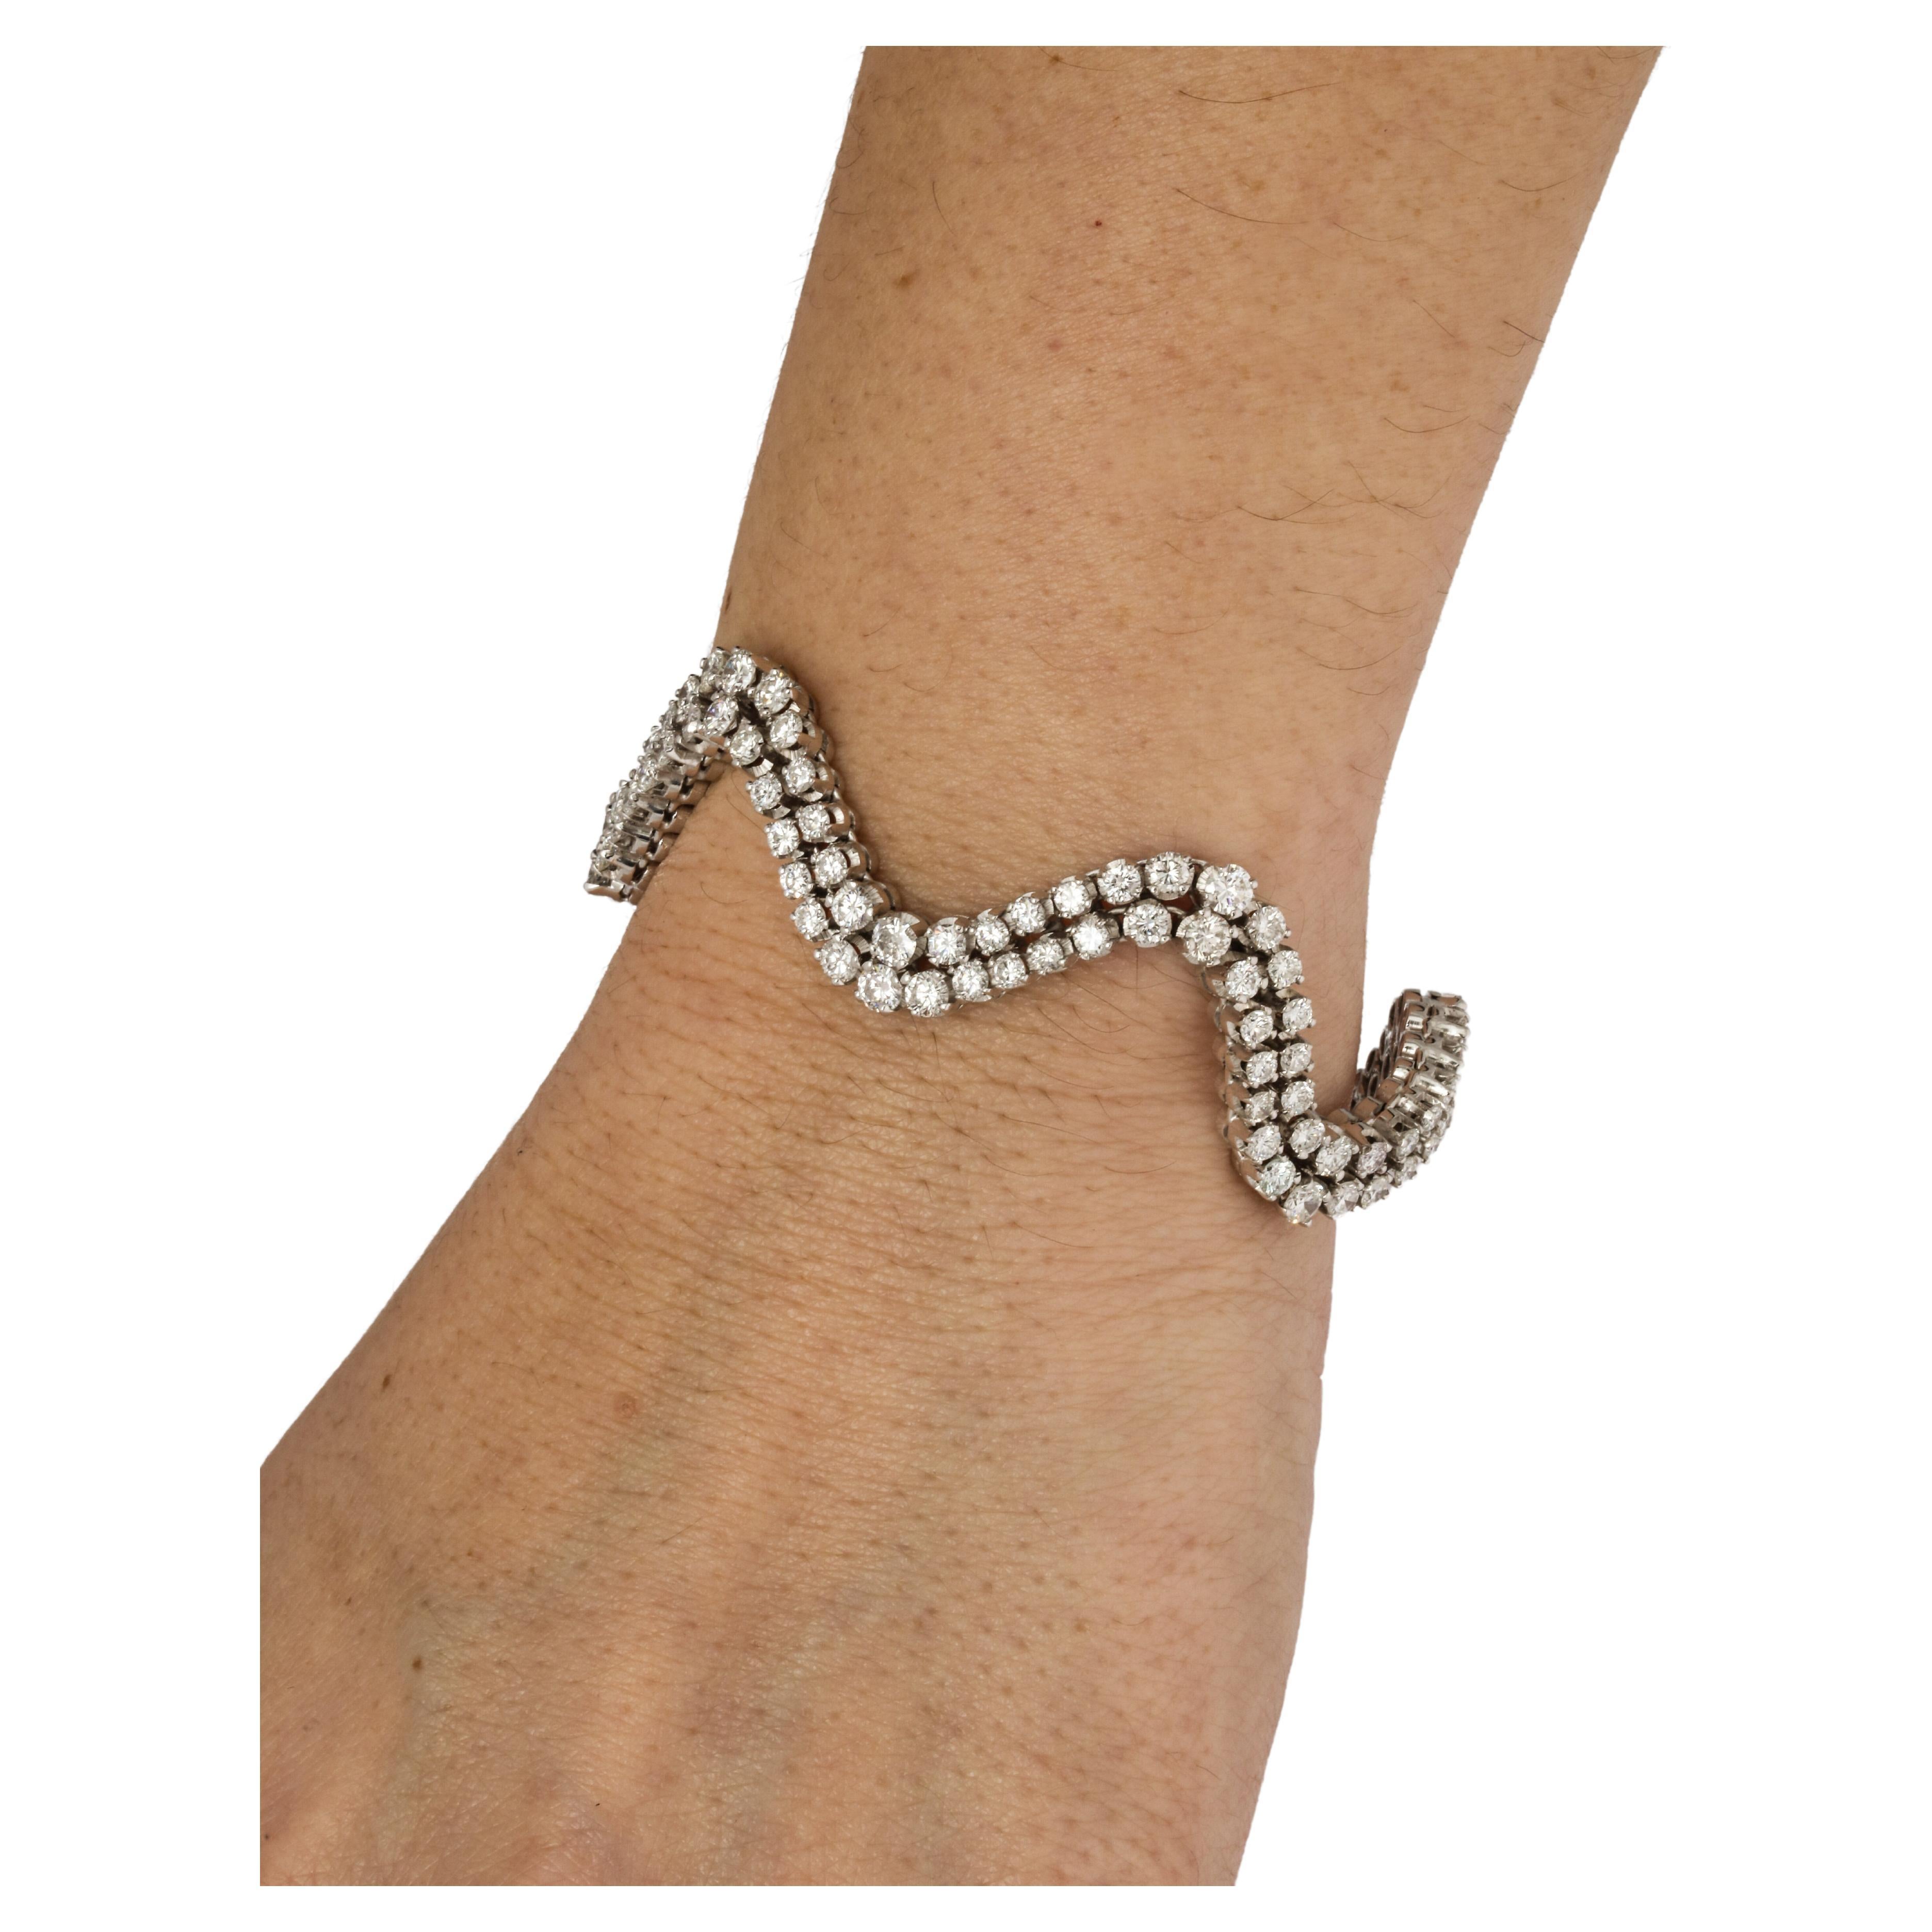 Feines Diamantarmband mit flexiblem, wellenförmigem, wellenförmigem Design